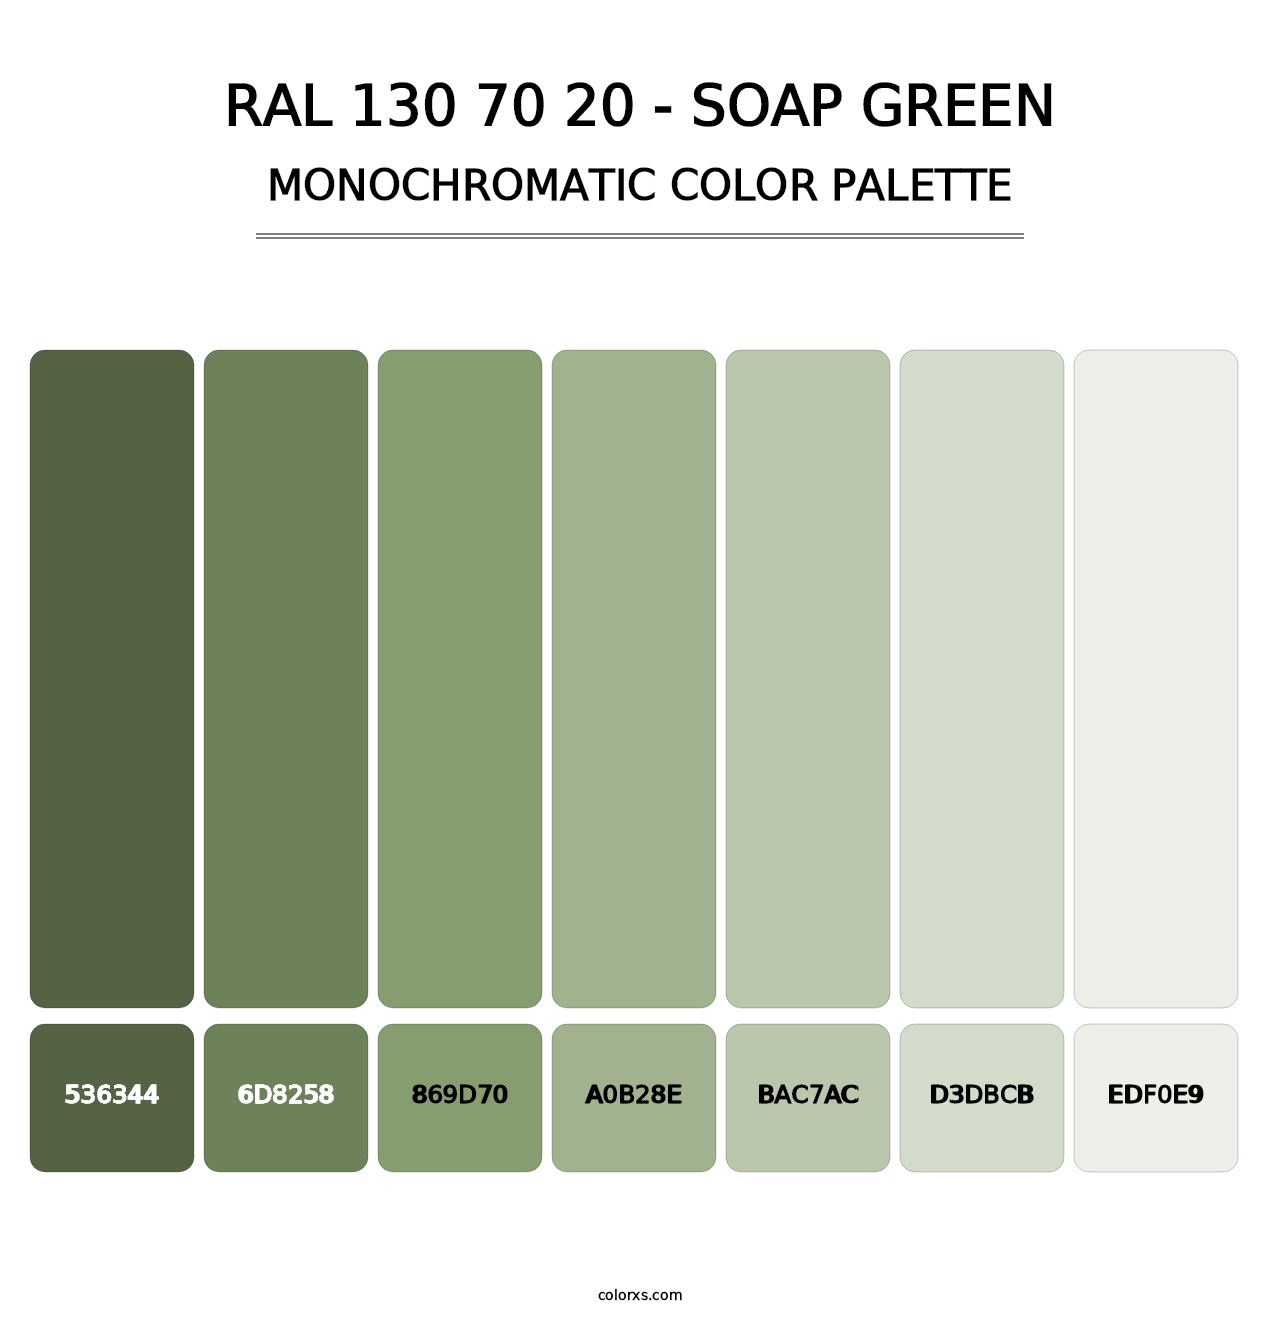 RAL 130 70 20 - Soap Green - Monochromatic Color Palette